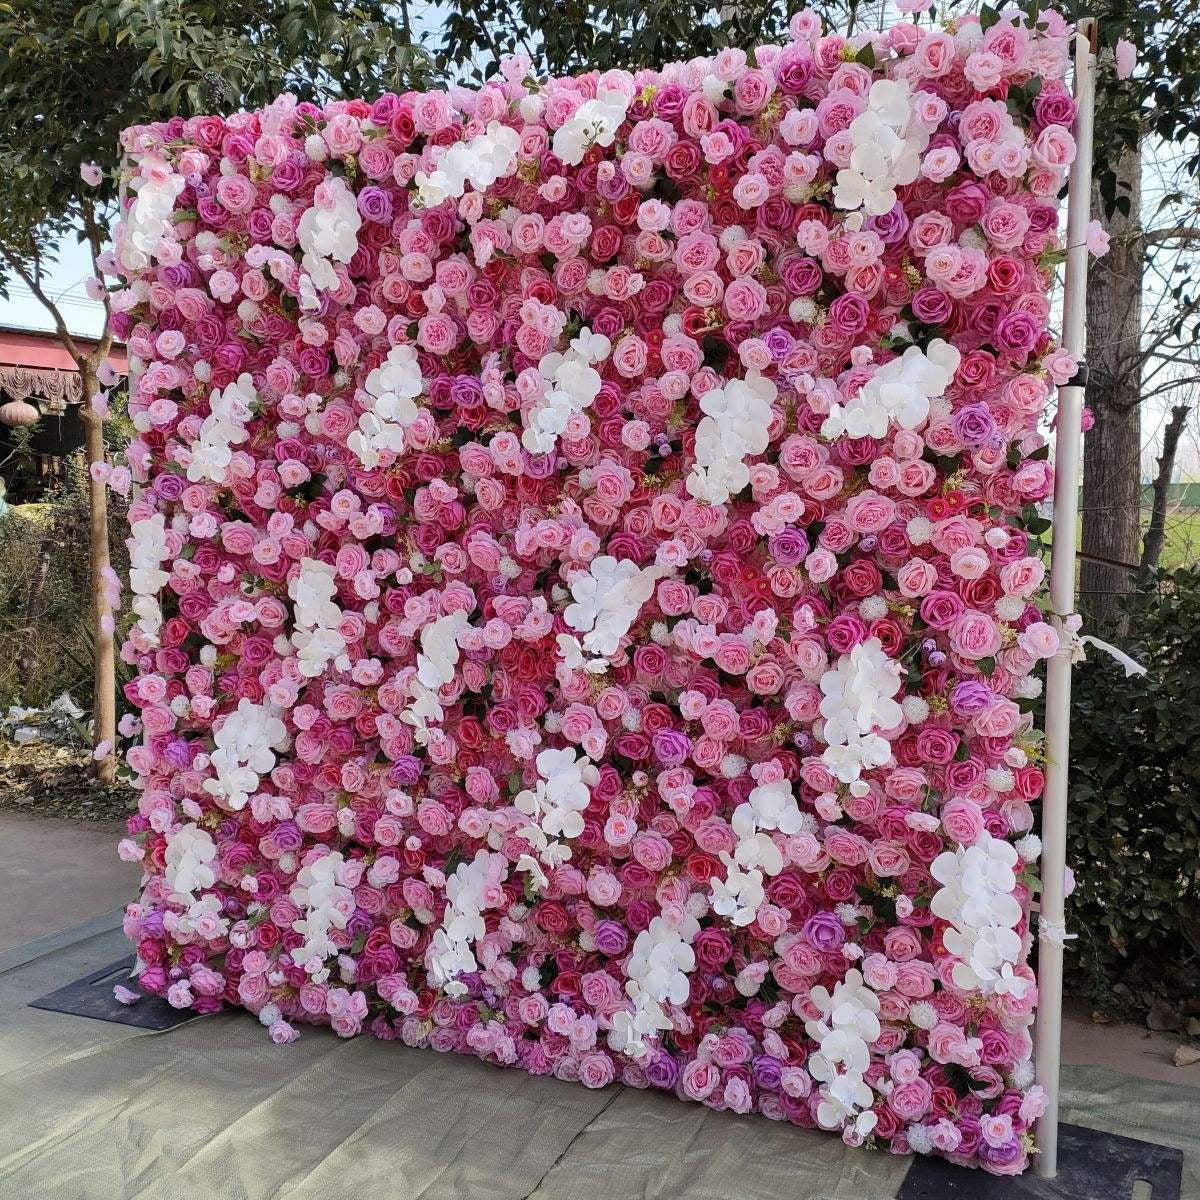 3D Artificial Flower Wall Arrangement Wedding Party Birthday Backdrop Decor HQ3834